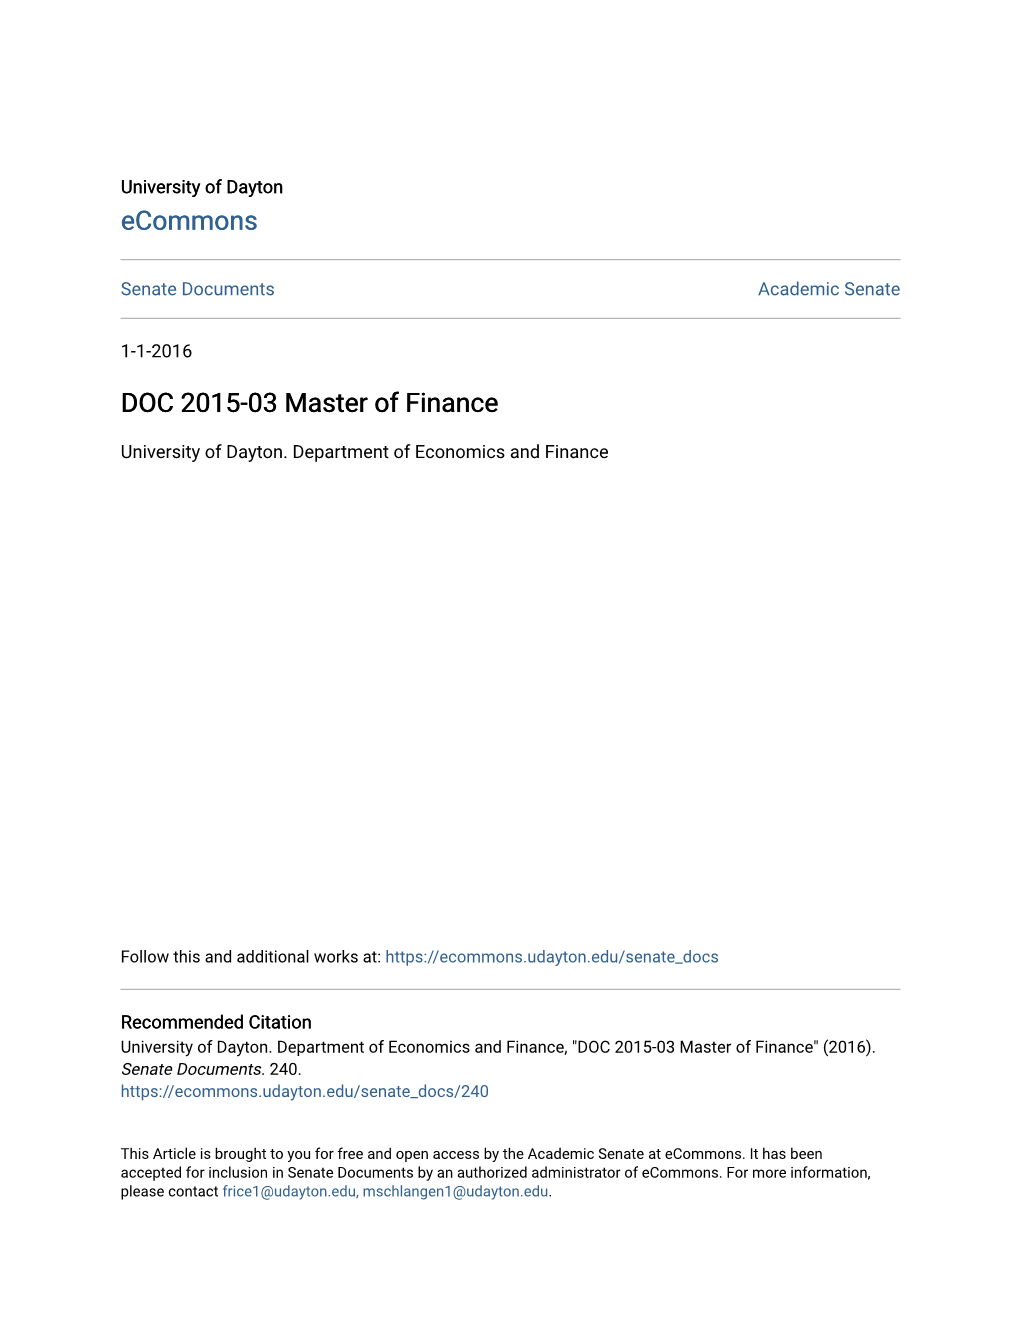 DOC 2015-03 Master of Finance